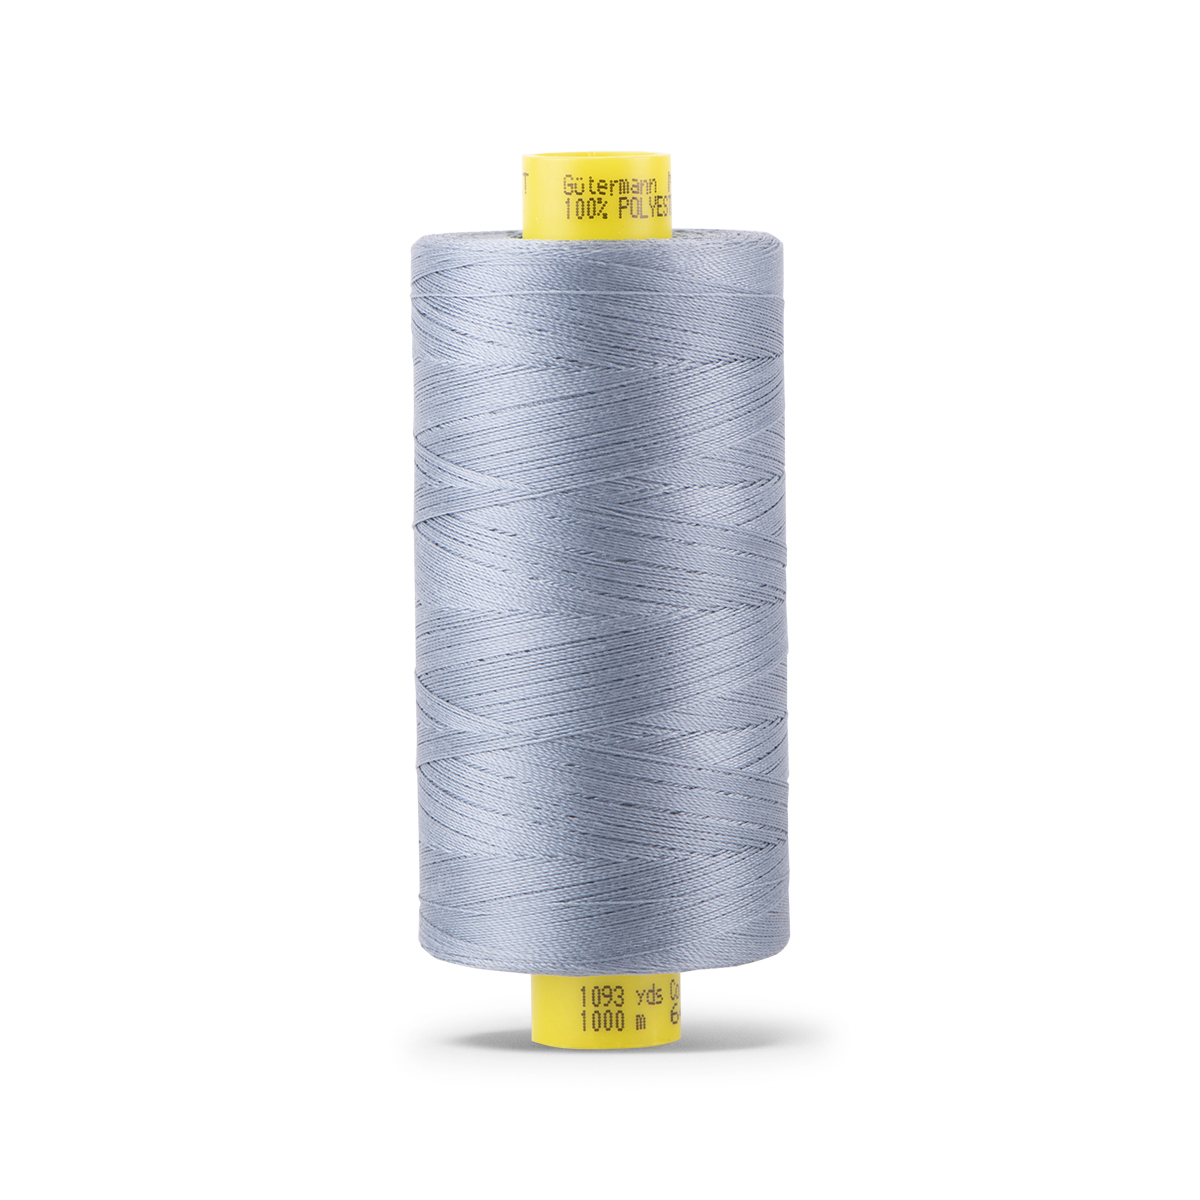 Gutermann Light Blue 100% Cotton Cone Thread